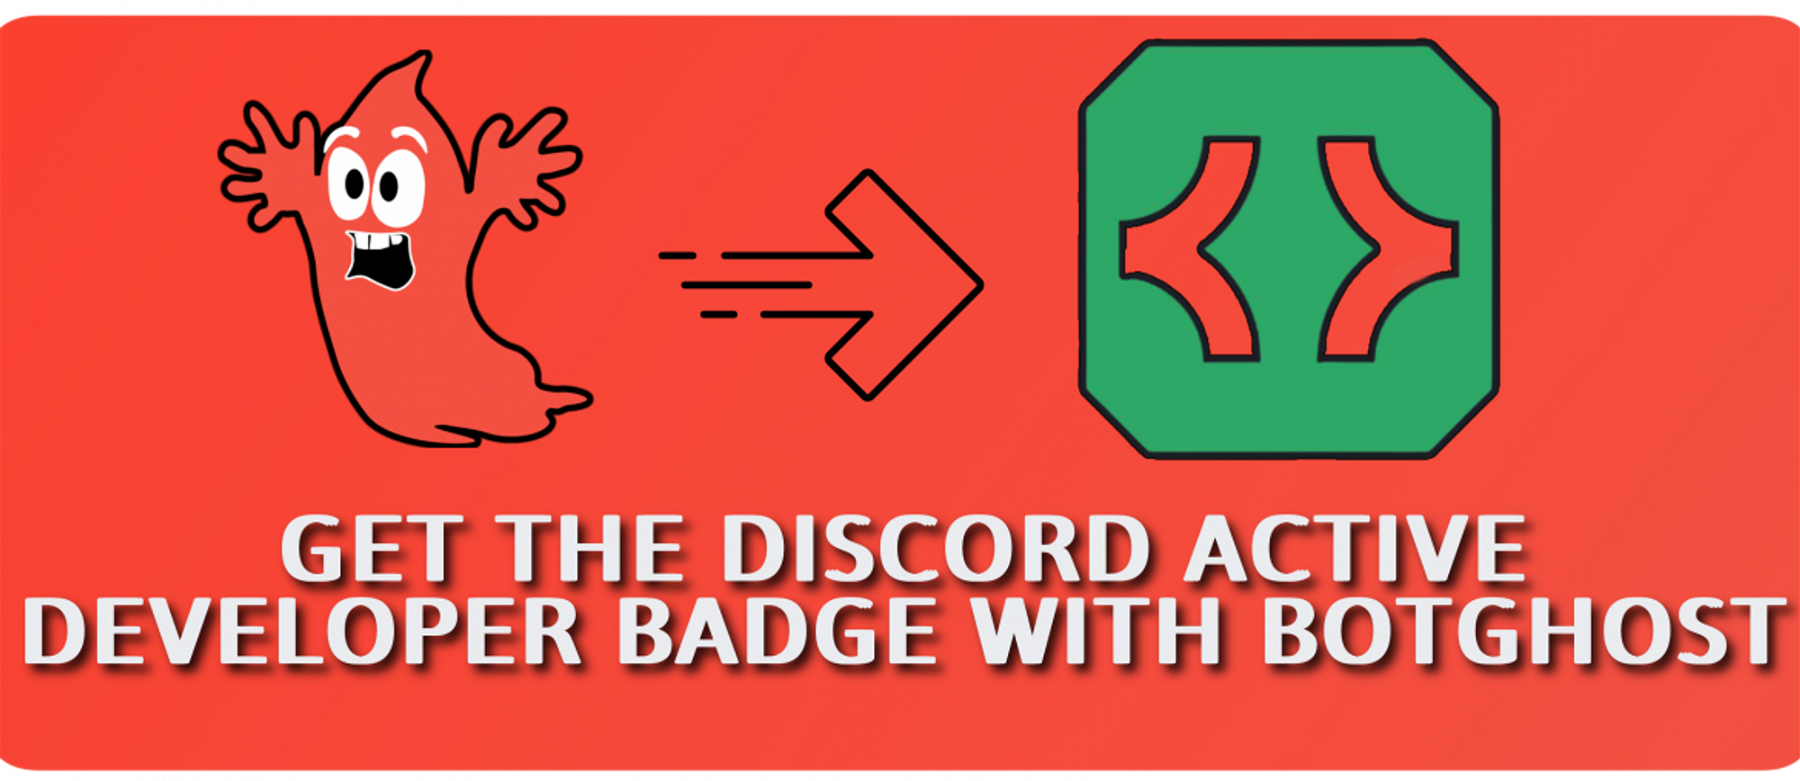 Discord is adding a new badge : r/discordapp